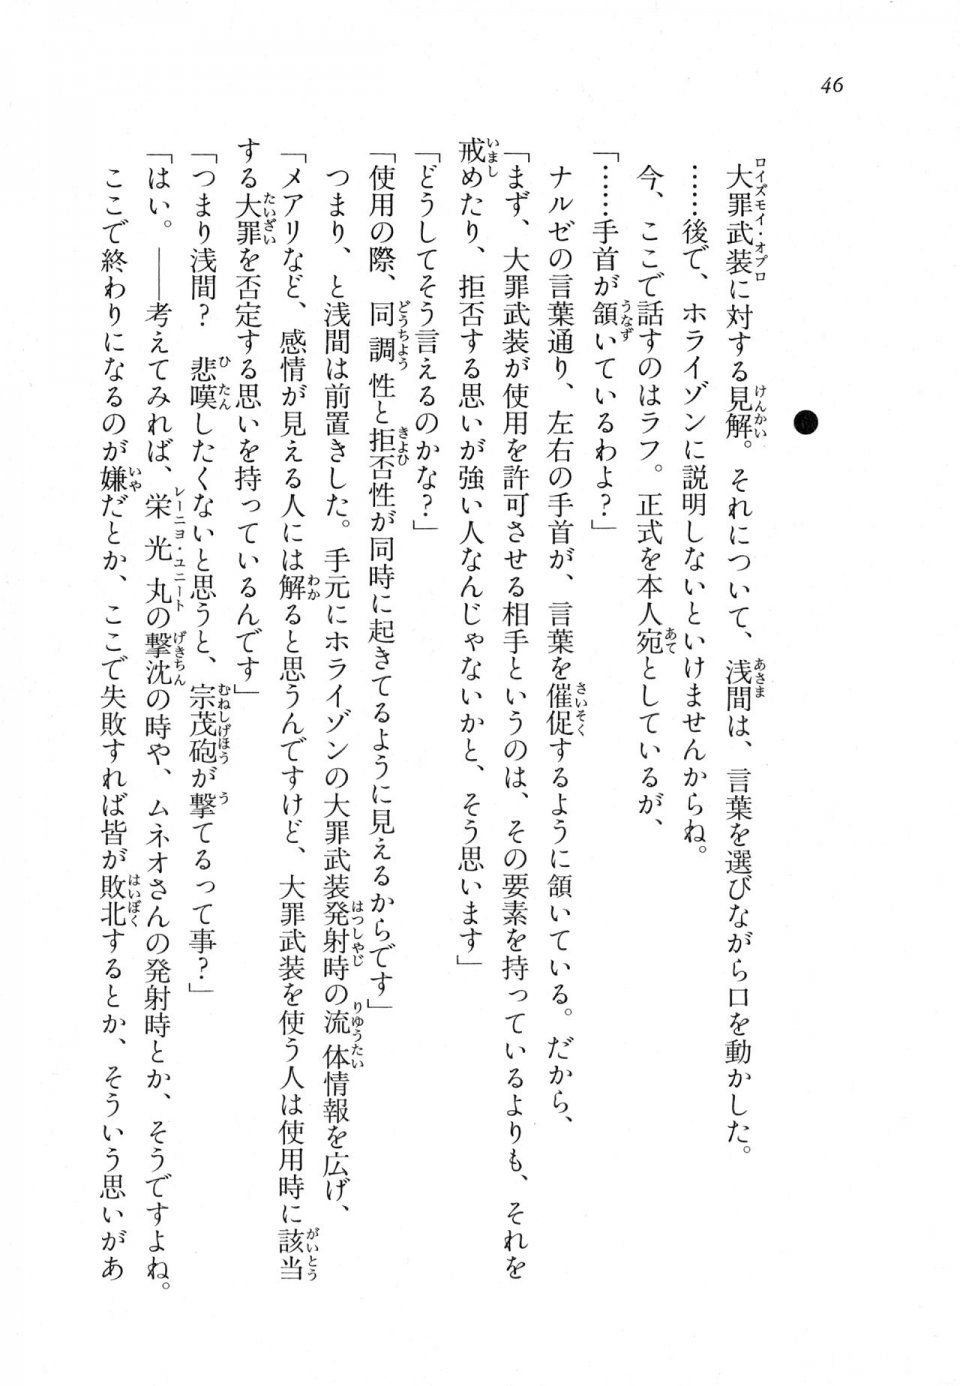 Kyoukai Senjou no Horizon LN Vol 18(7C) Part 1 - Photo #46